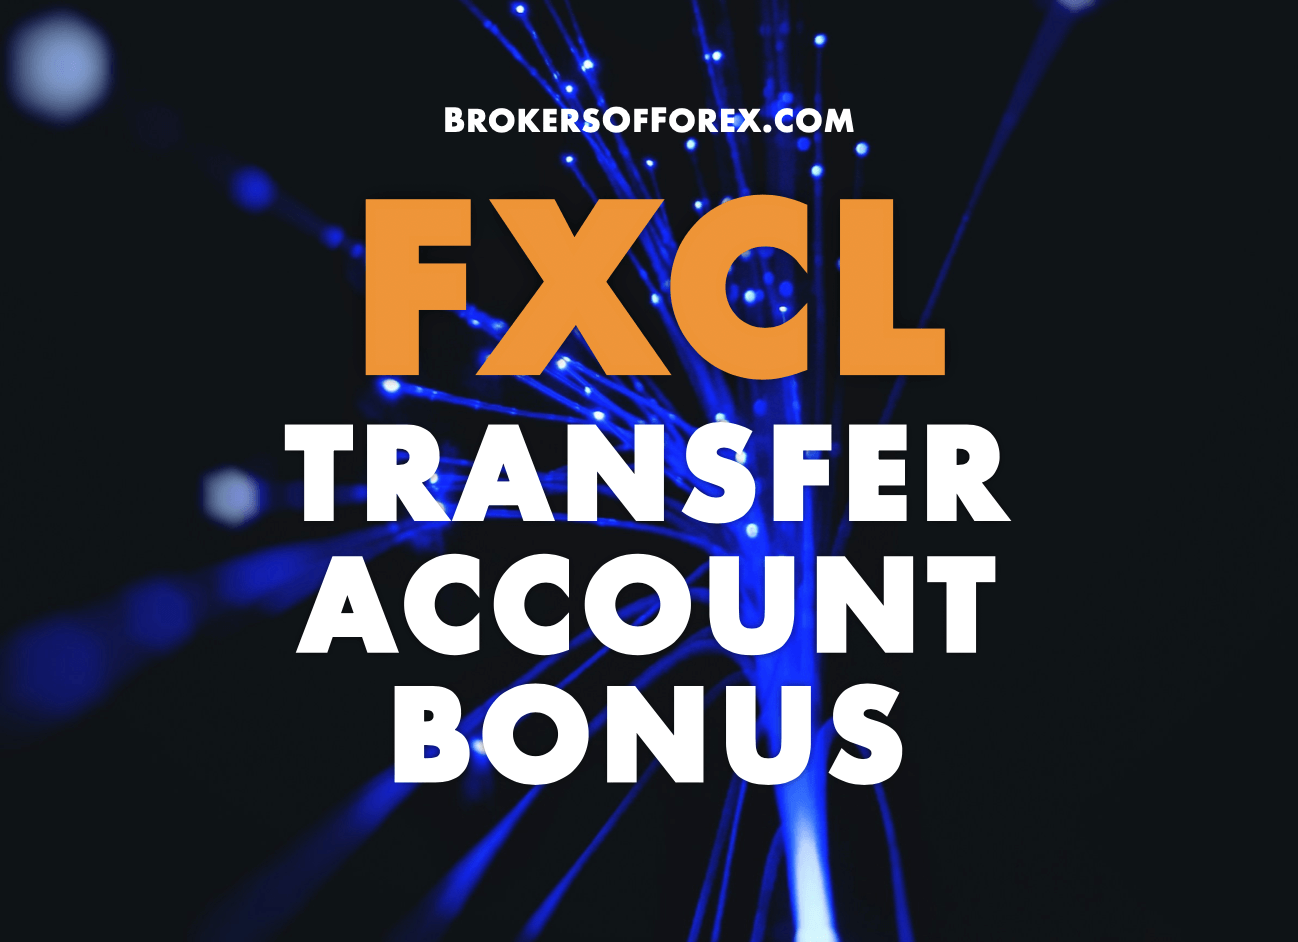 FXCL Transfer Account Bonus